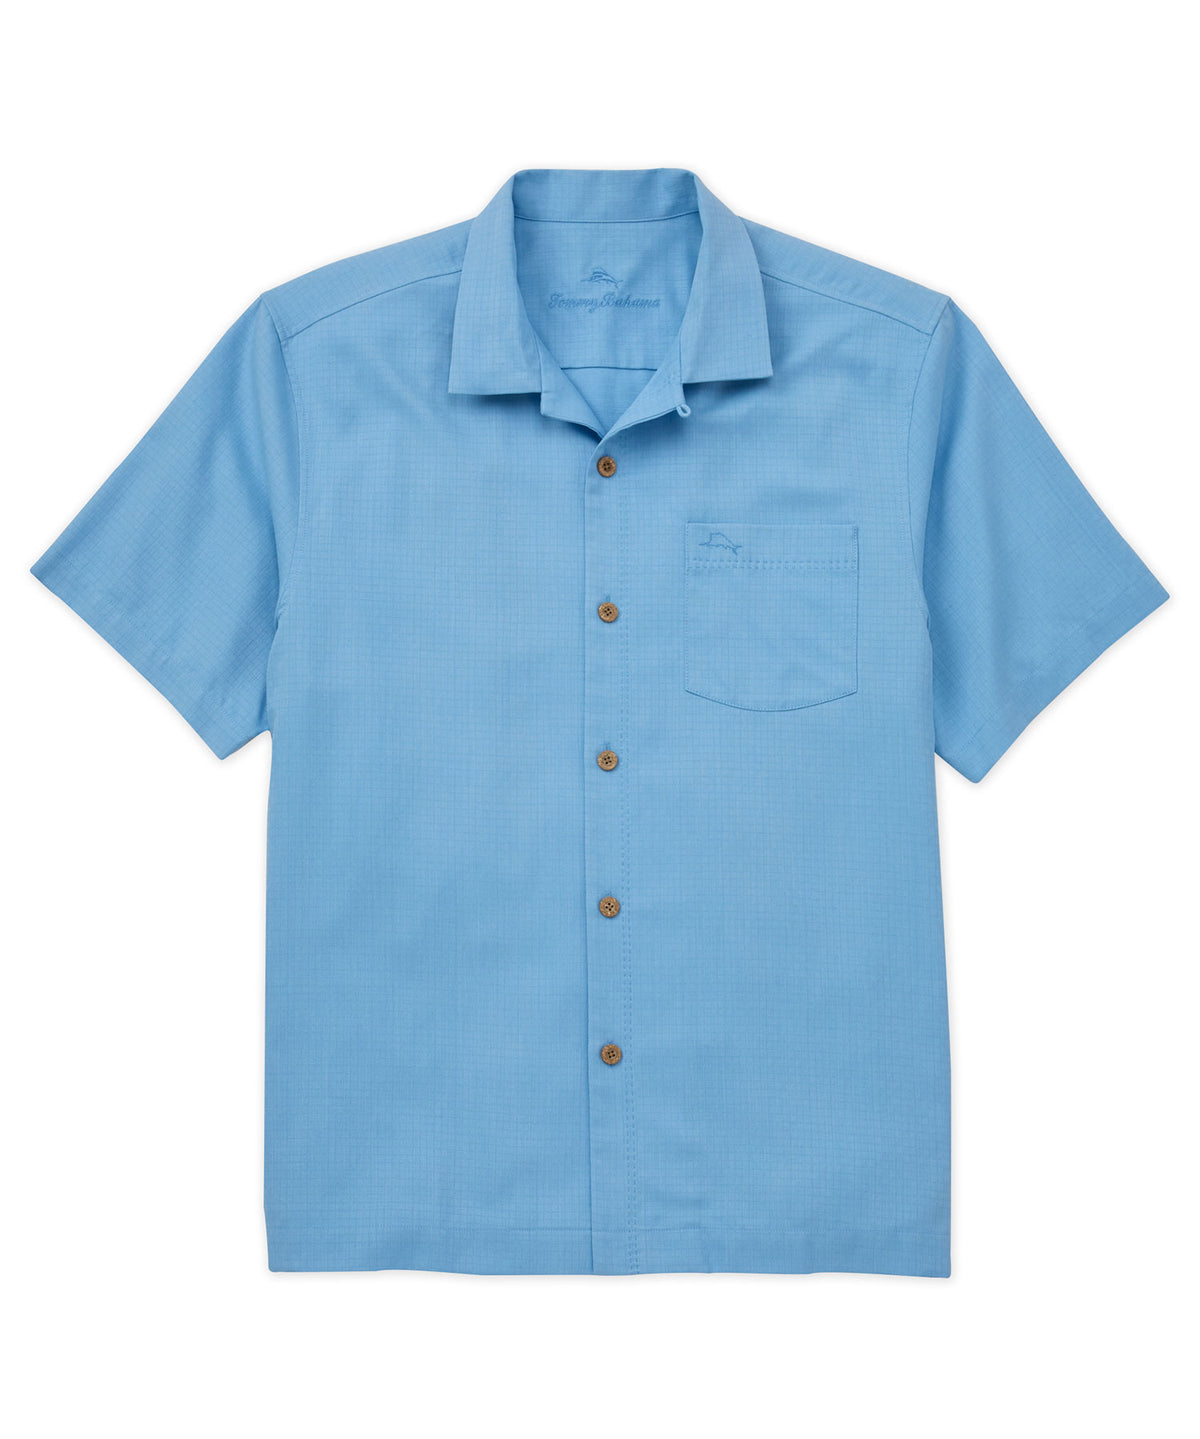 Tommy Bahama Short Sleeve Coastal Breeze Check Camp Shirt, Big & Tall